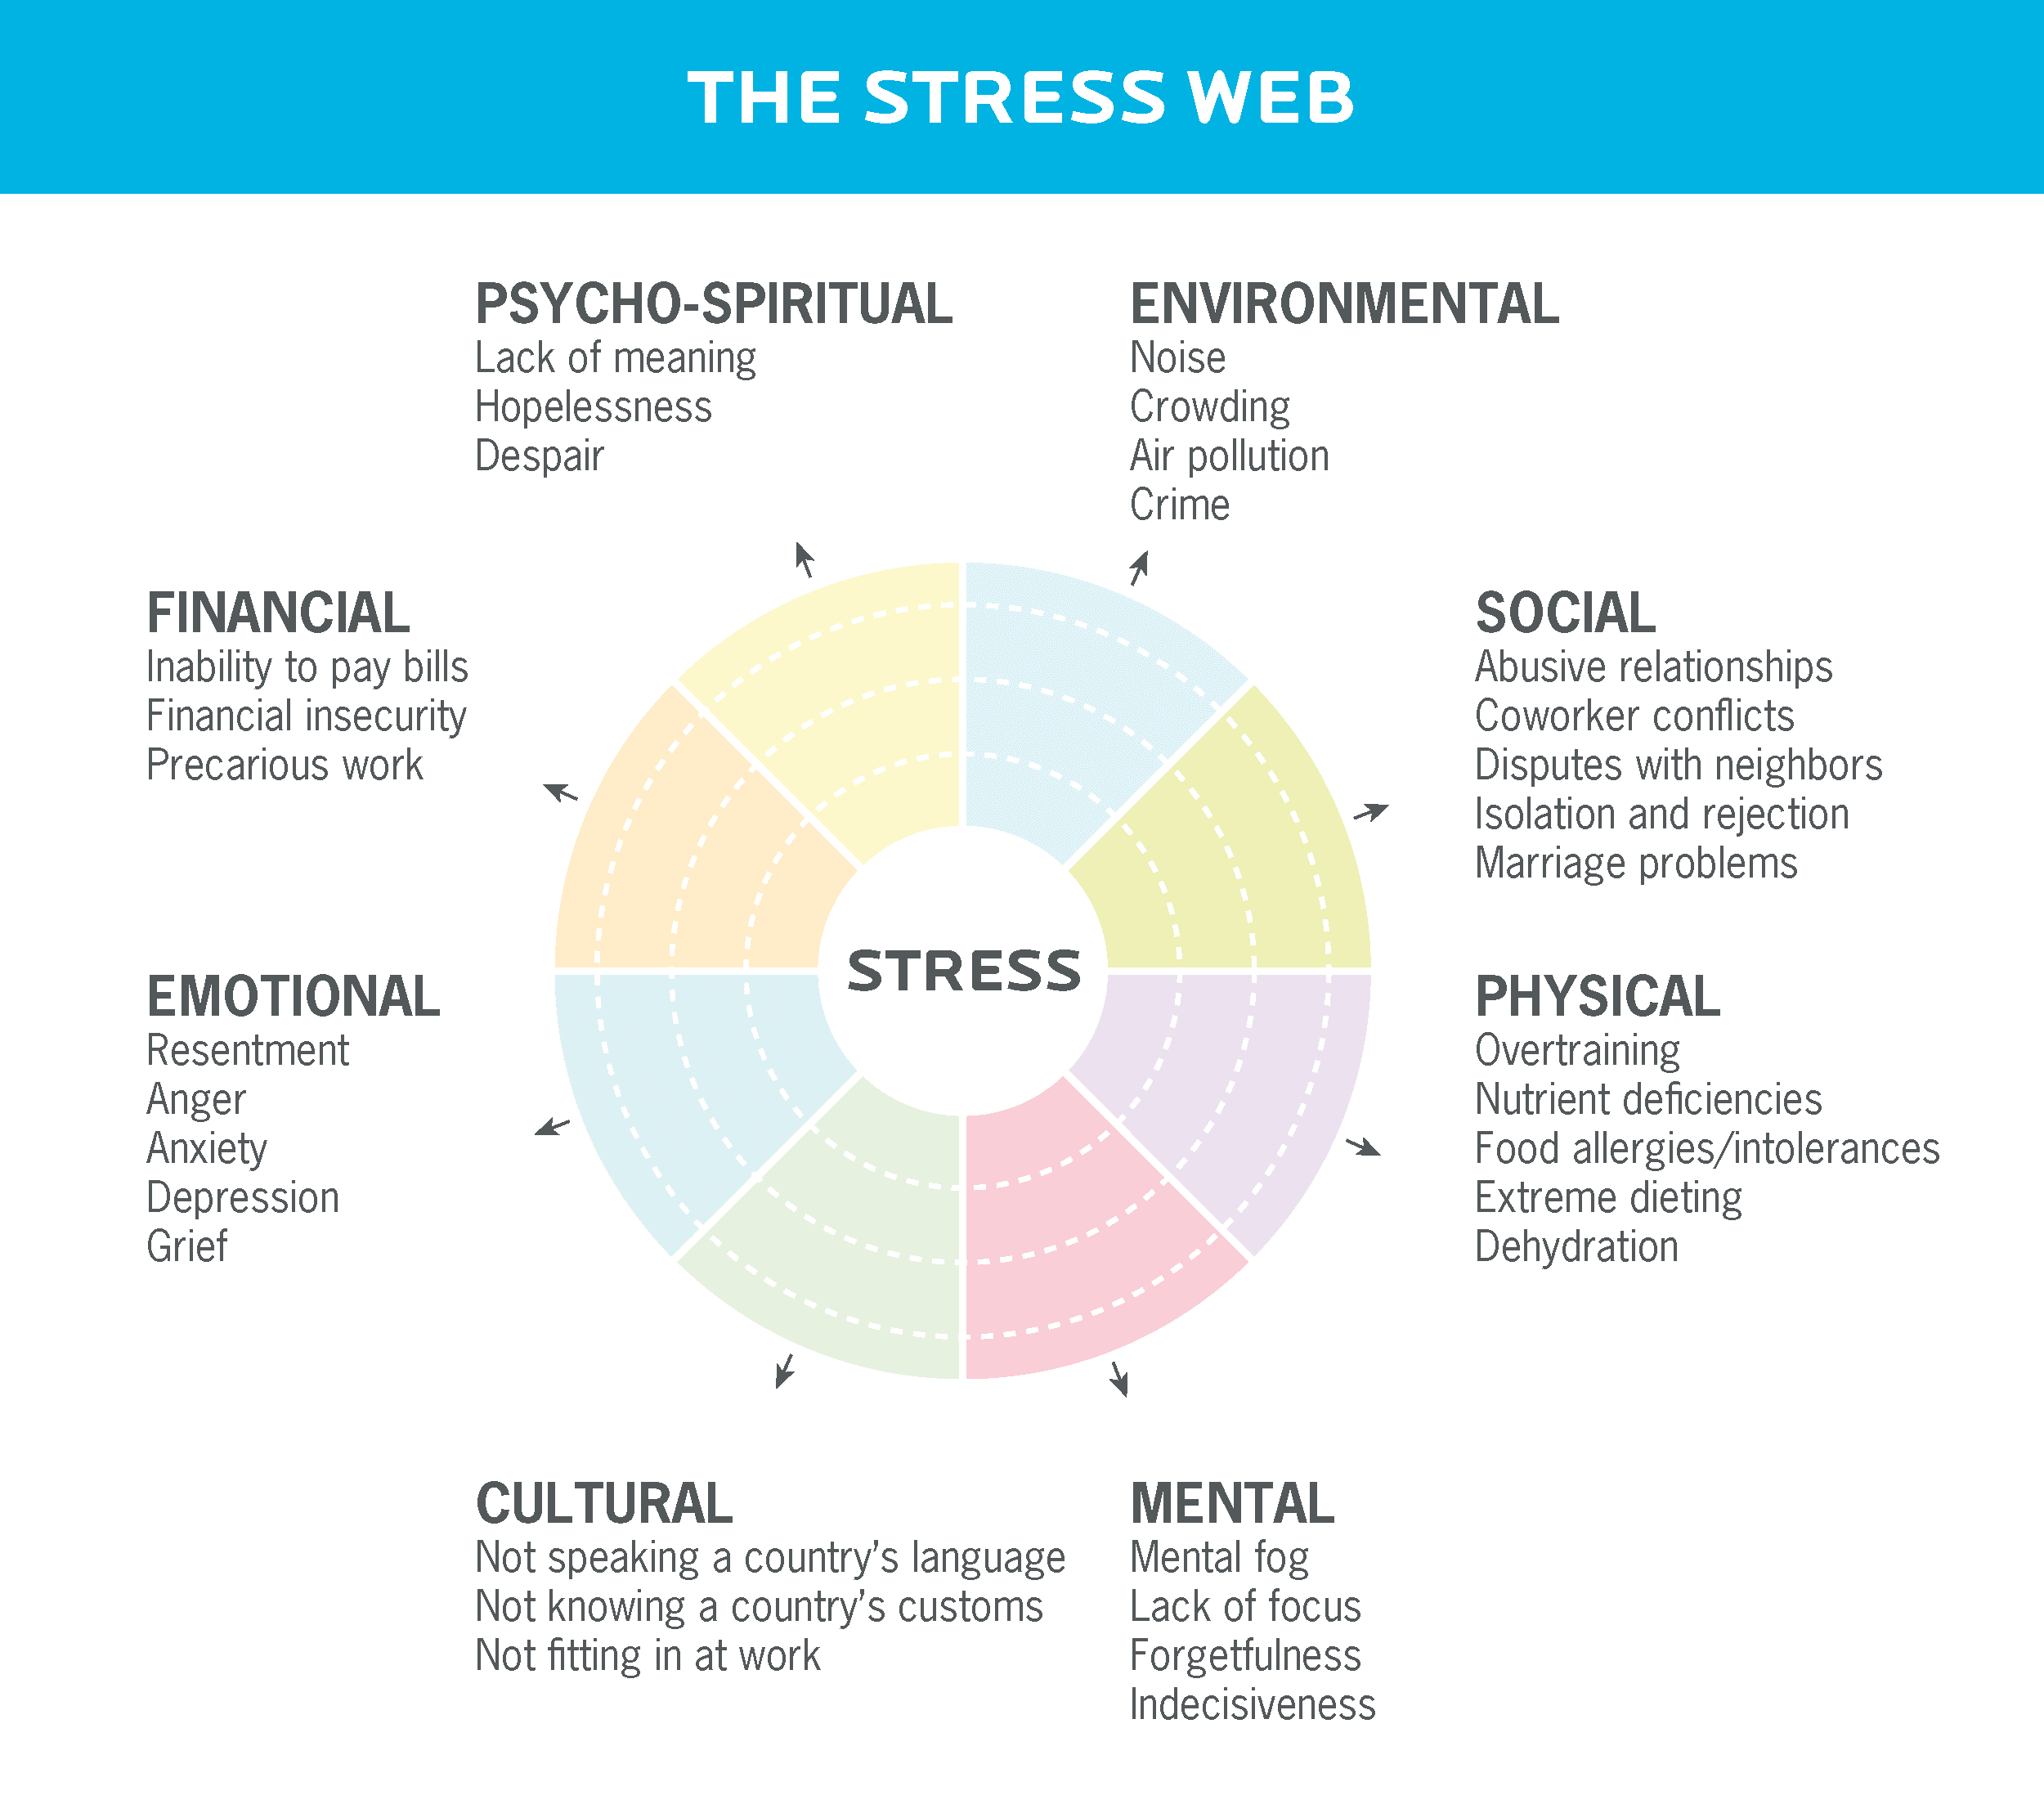 Various types of stress including cultural, mental, physical, social, environmental, psycho-spiritual, financial, emotional.